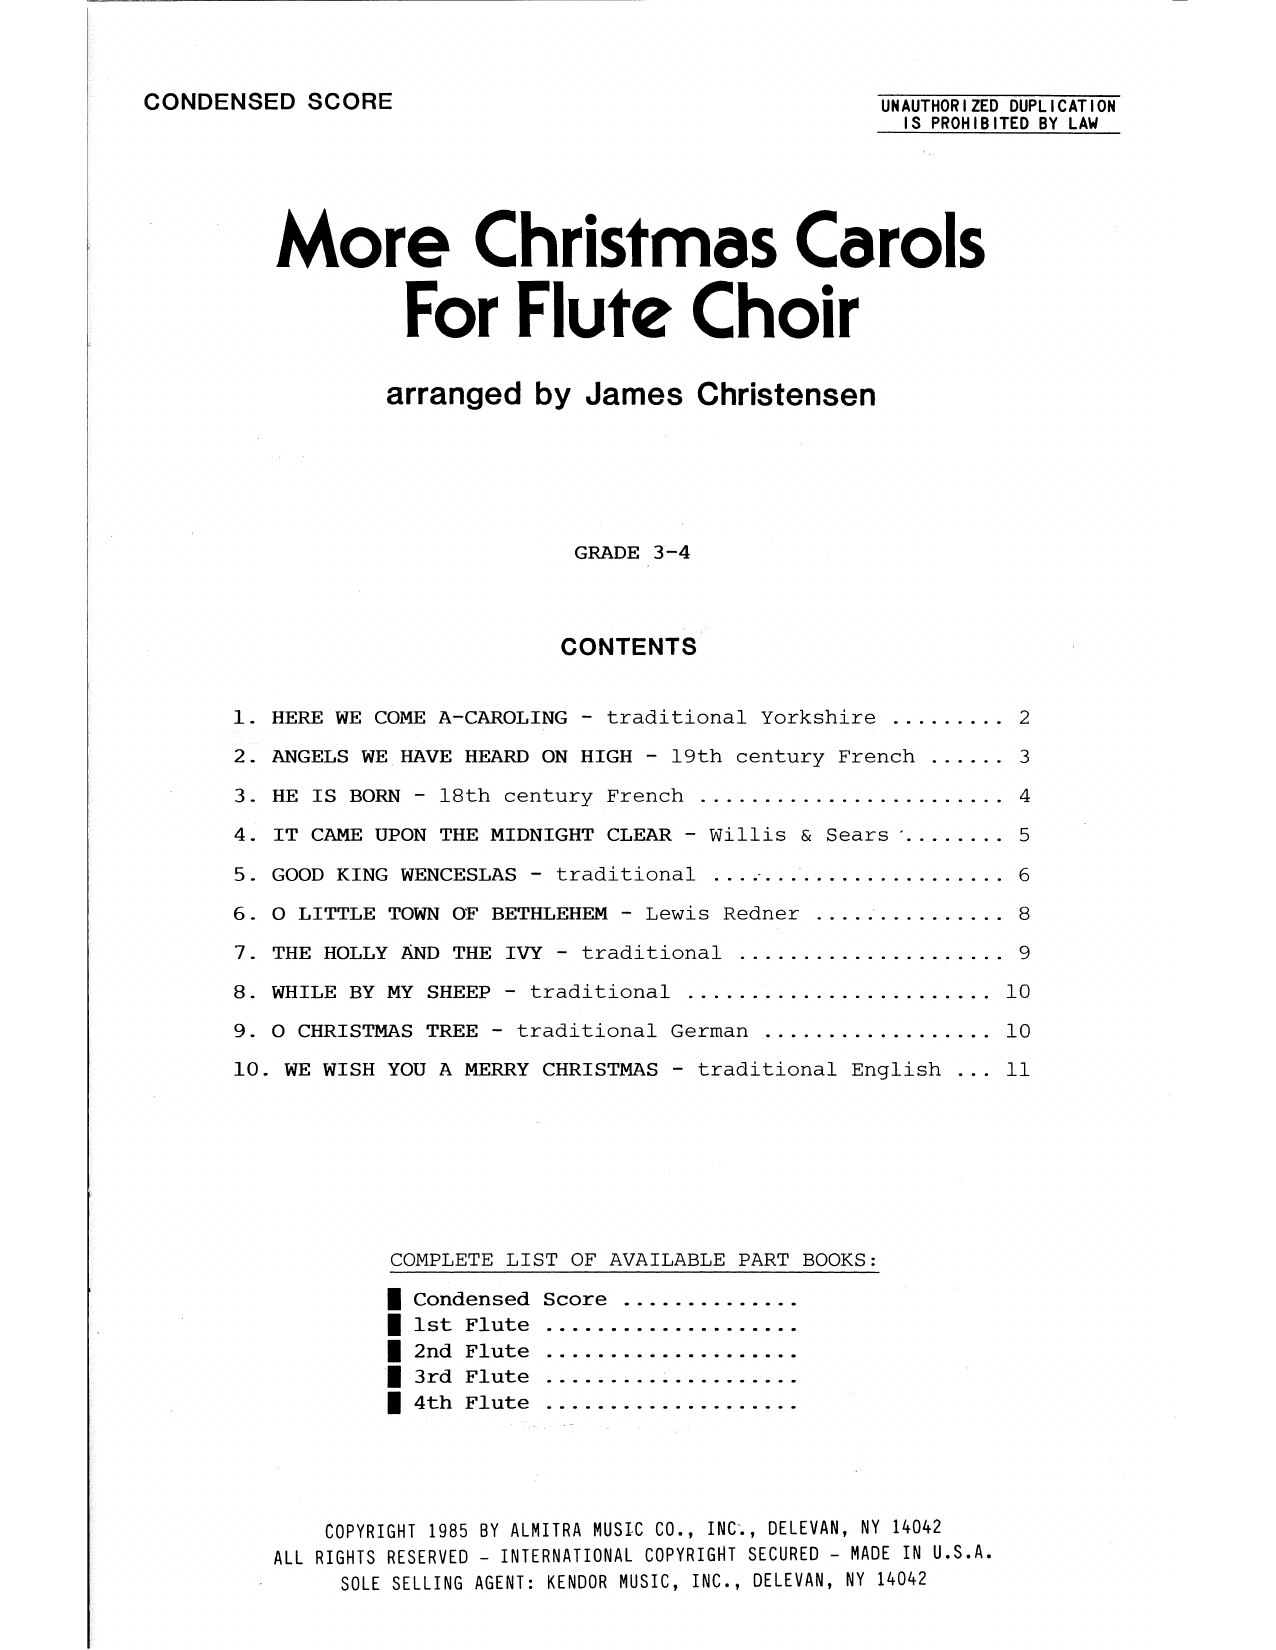 Download Various More Christmas Carols For Flute Choir ( Sheet Music